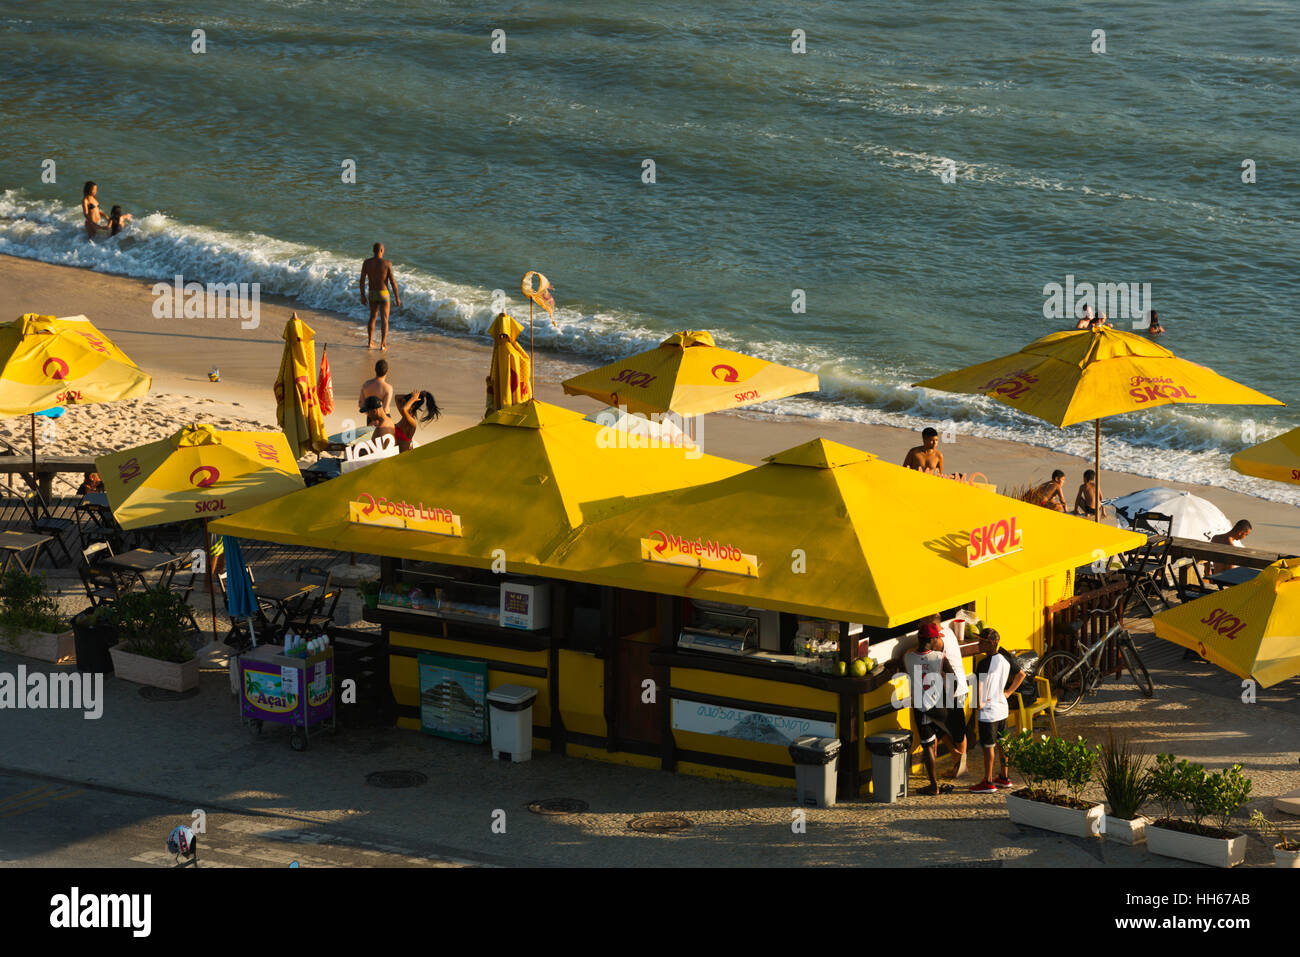 People on a beach, Rio de Janeiro, Brazil Stock Photo